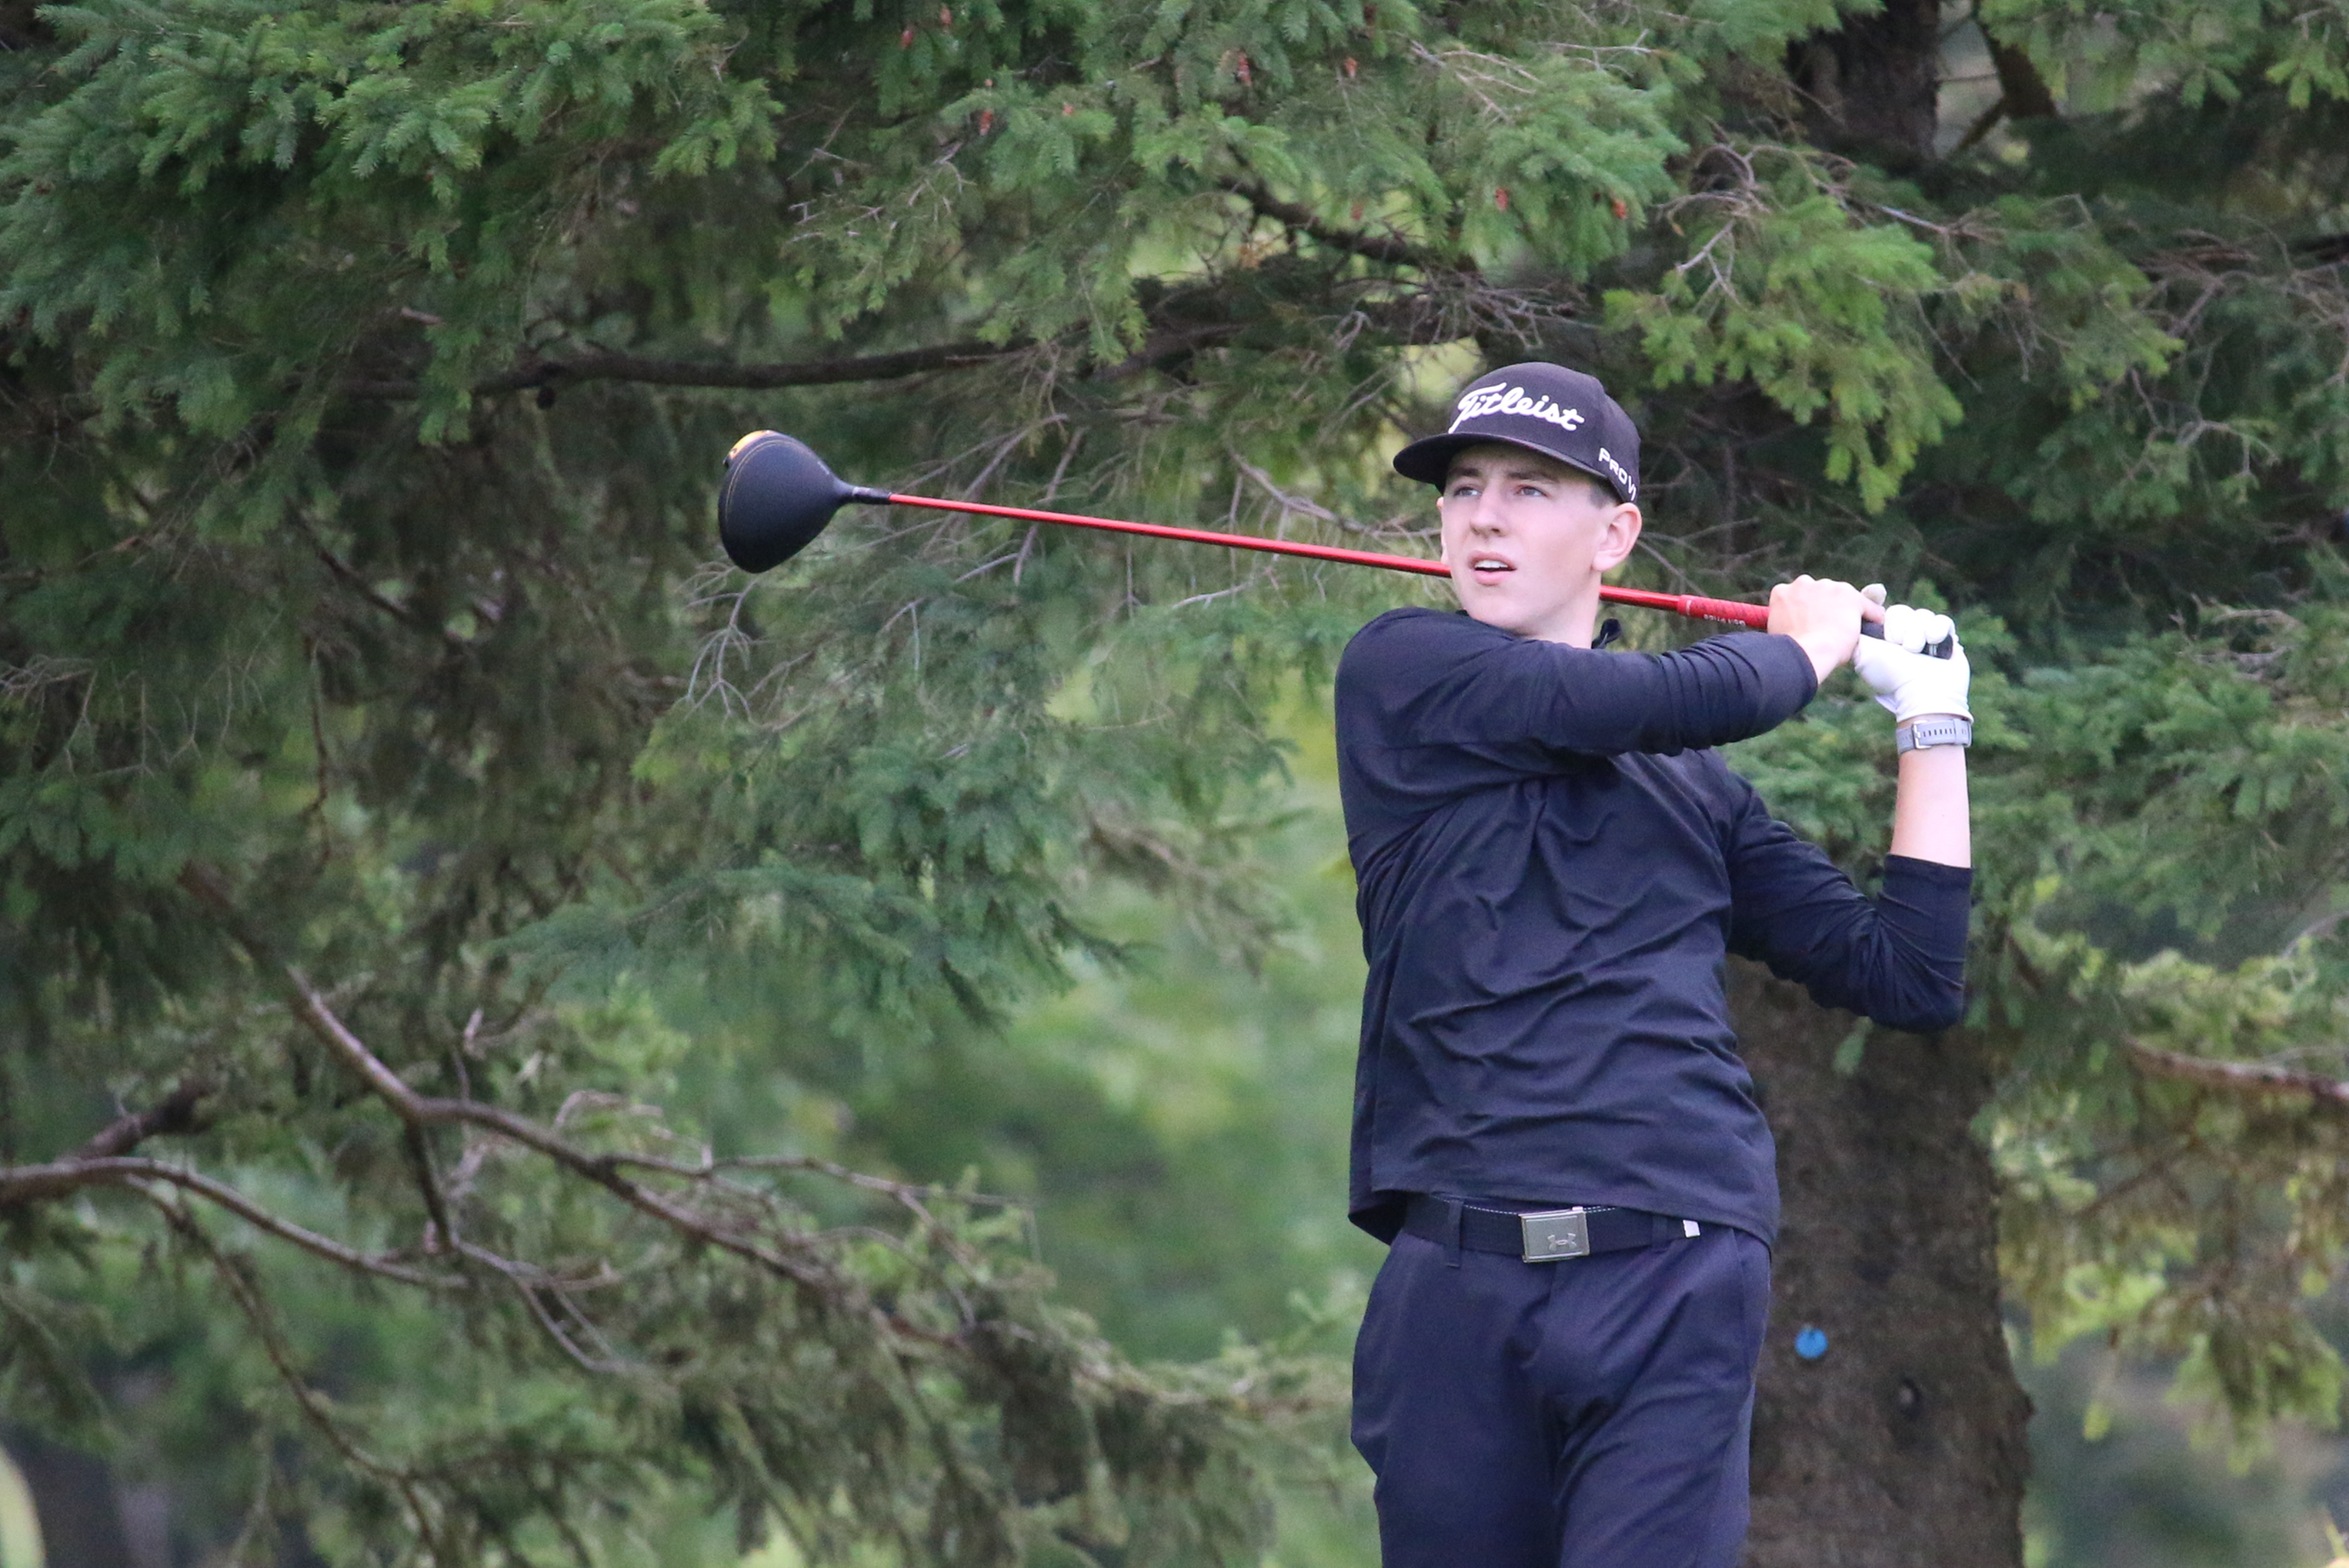 Men's Golf takes 9th at Lourdes Spring Invitational